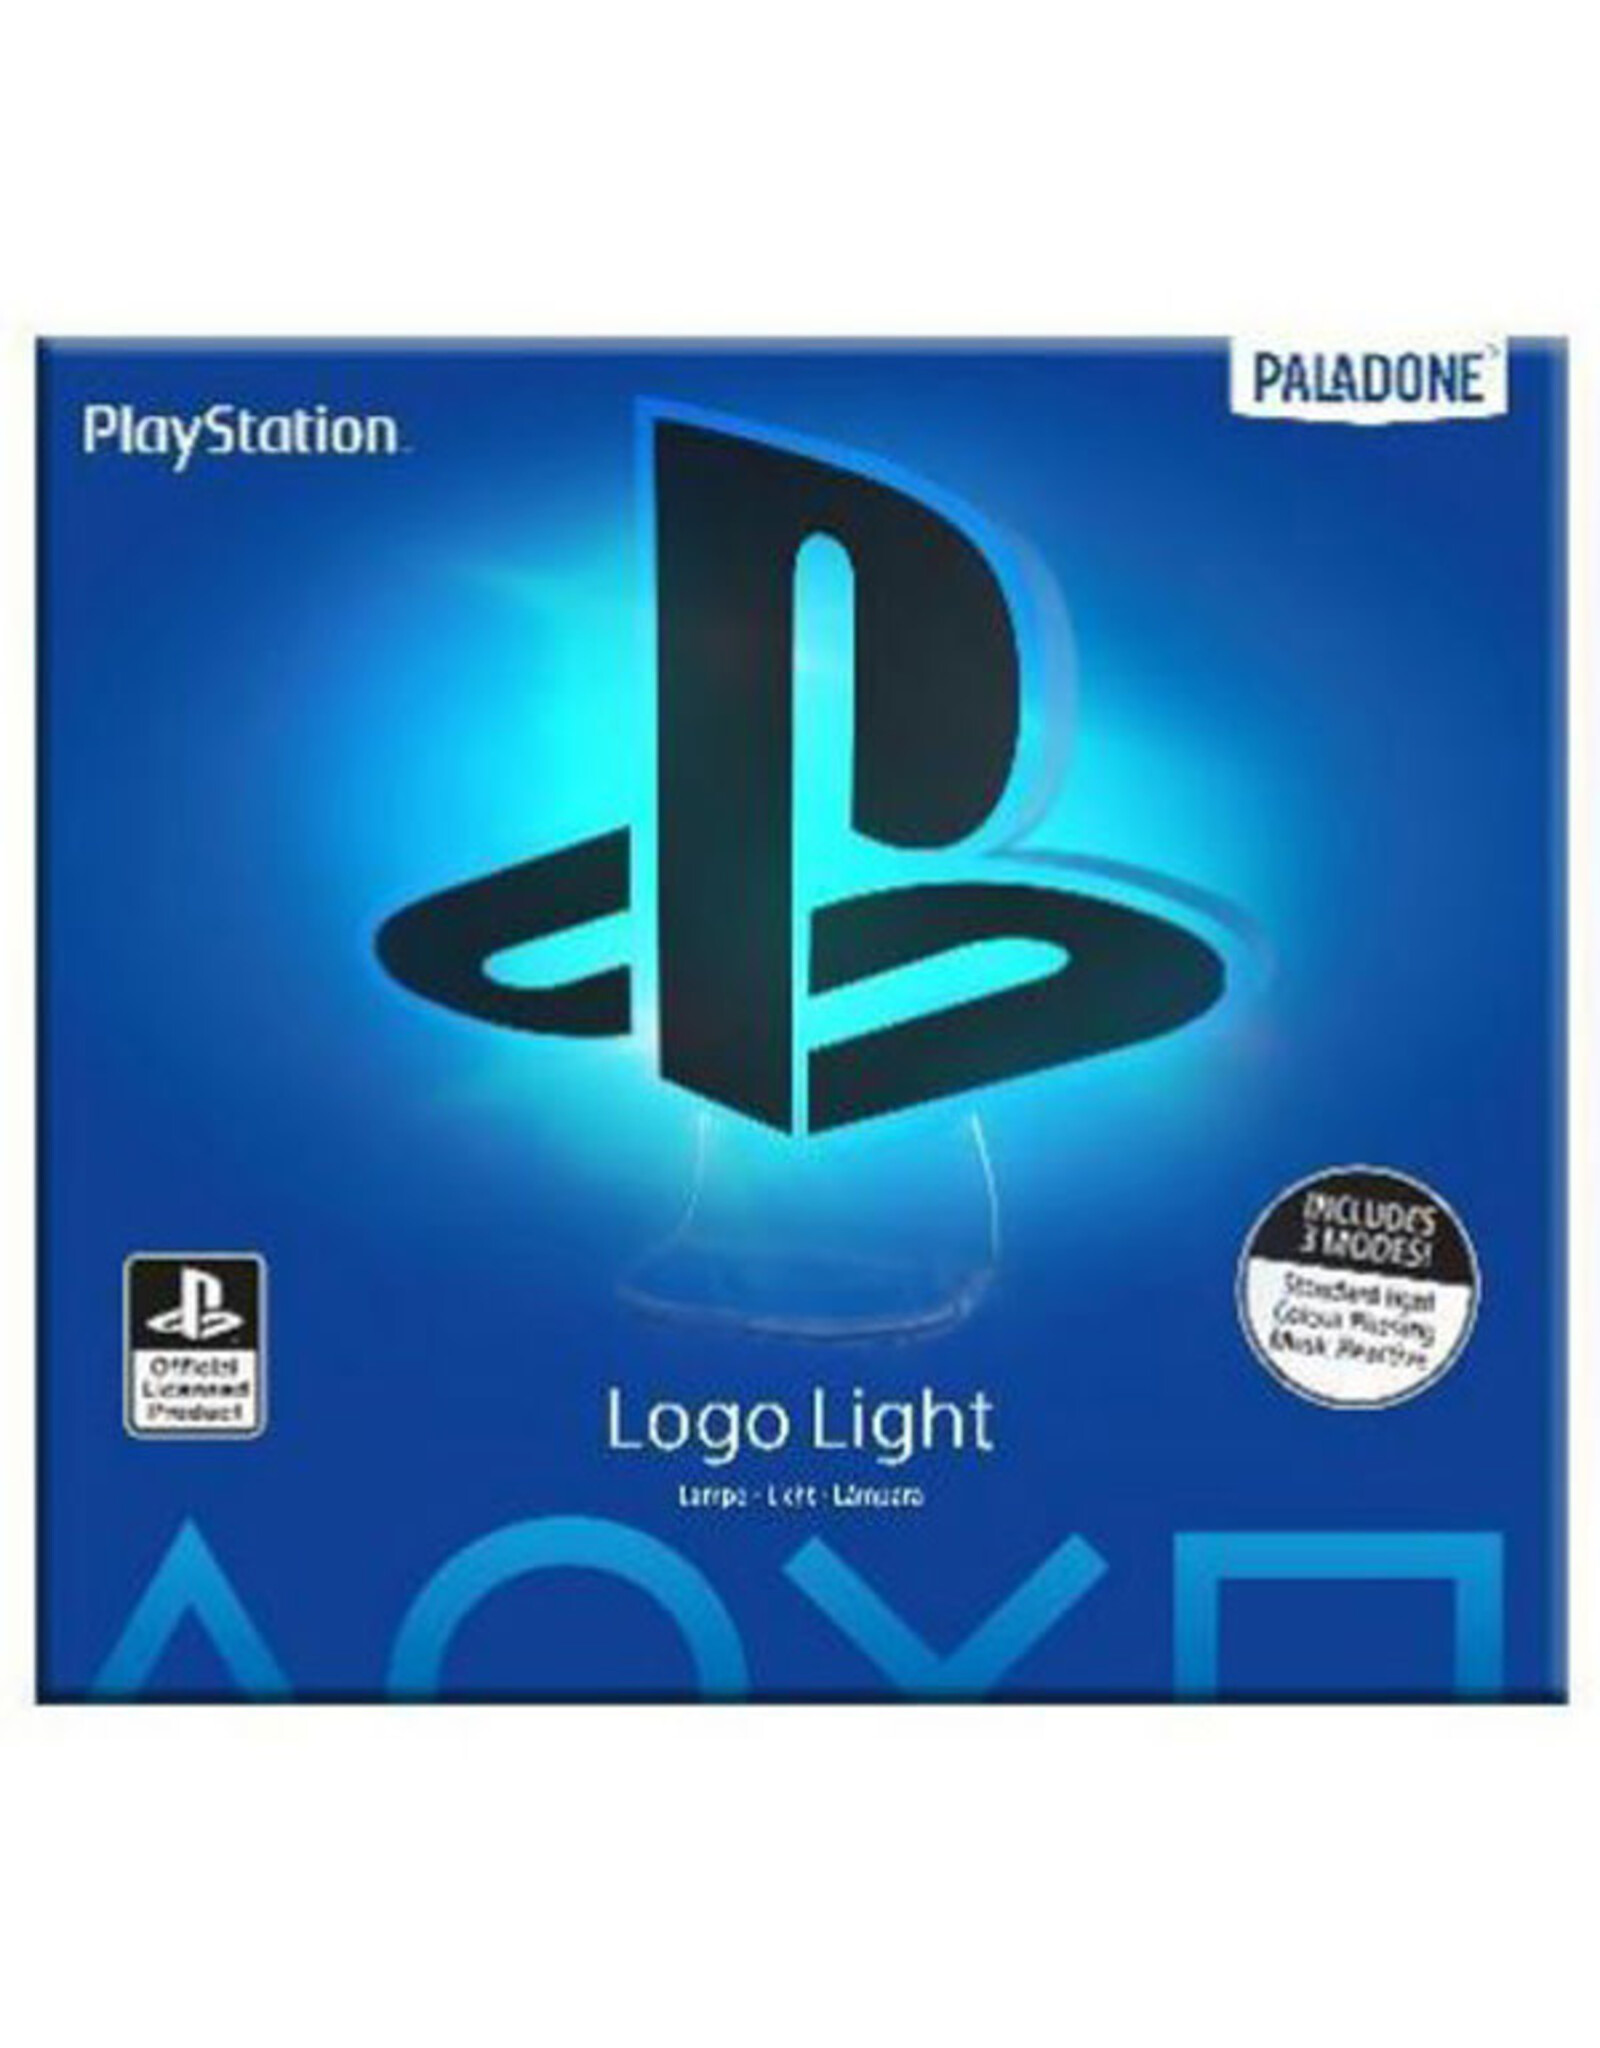 Paladone Playstation - Logo Light